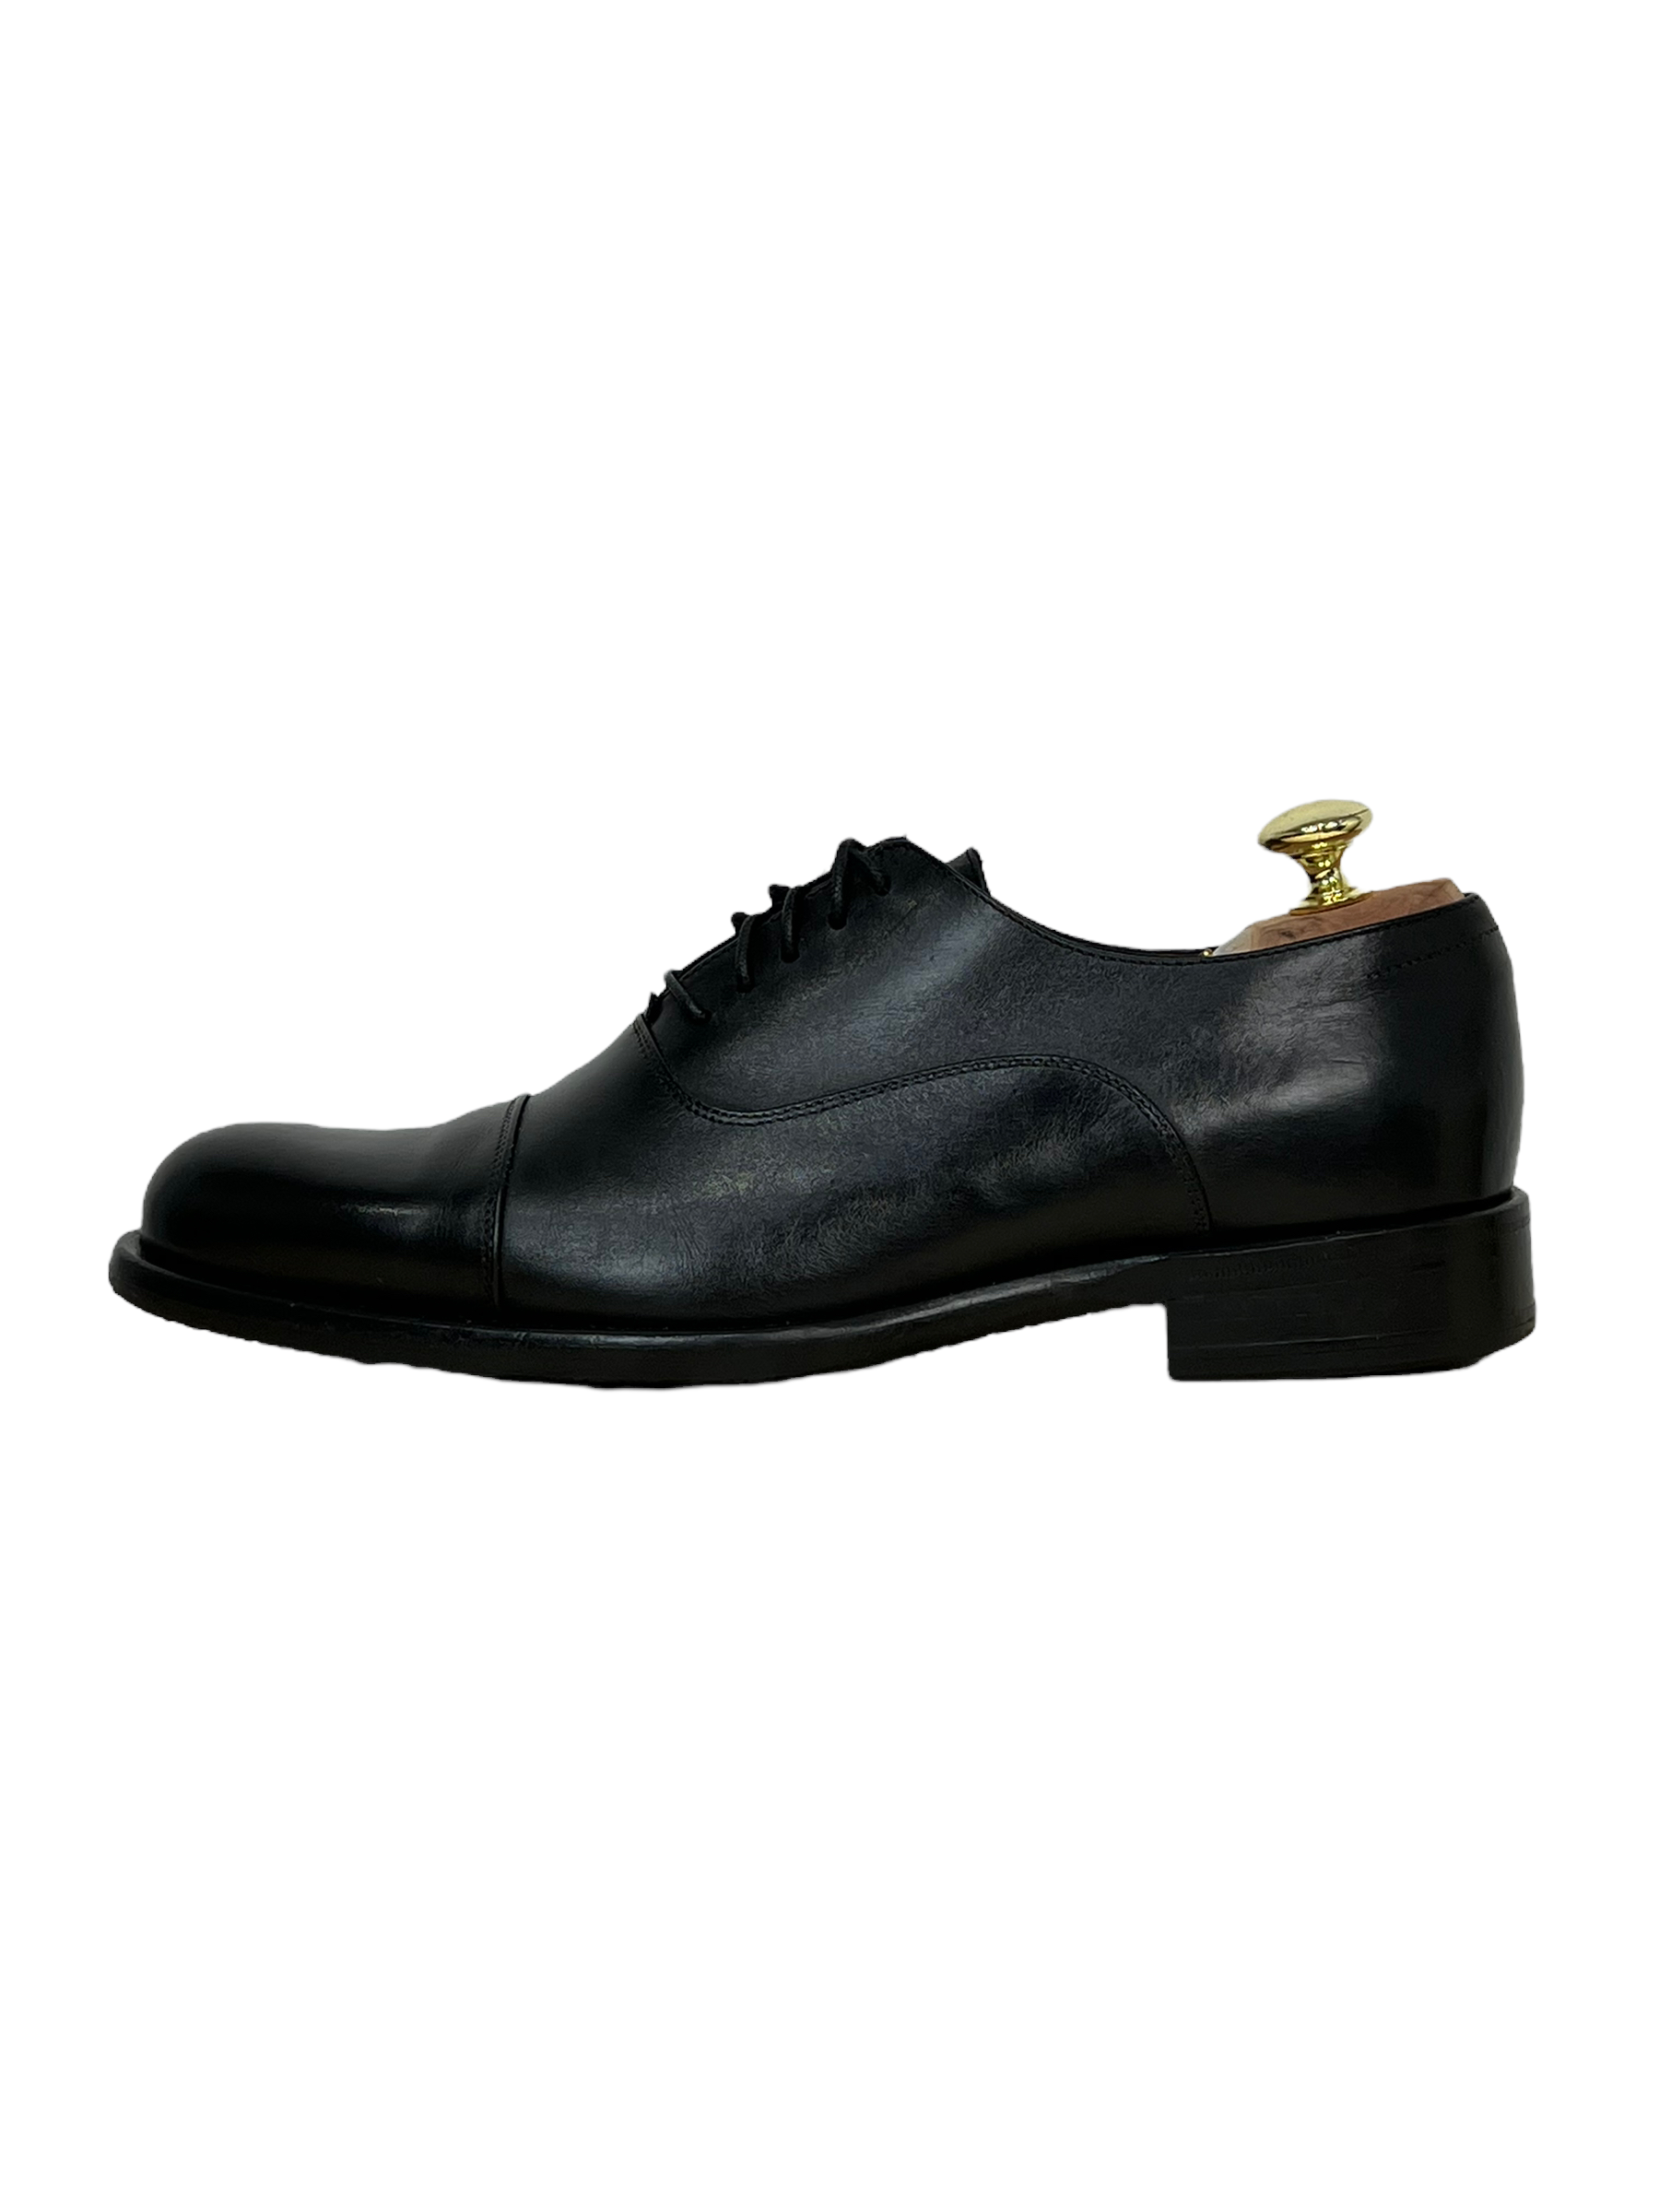 Giorgio Armani Black Leather Cap Toe Oxford Dress Shoes – Genuine Design  Luxury Consignment